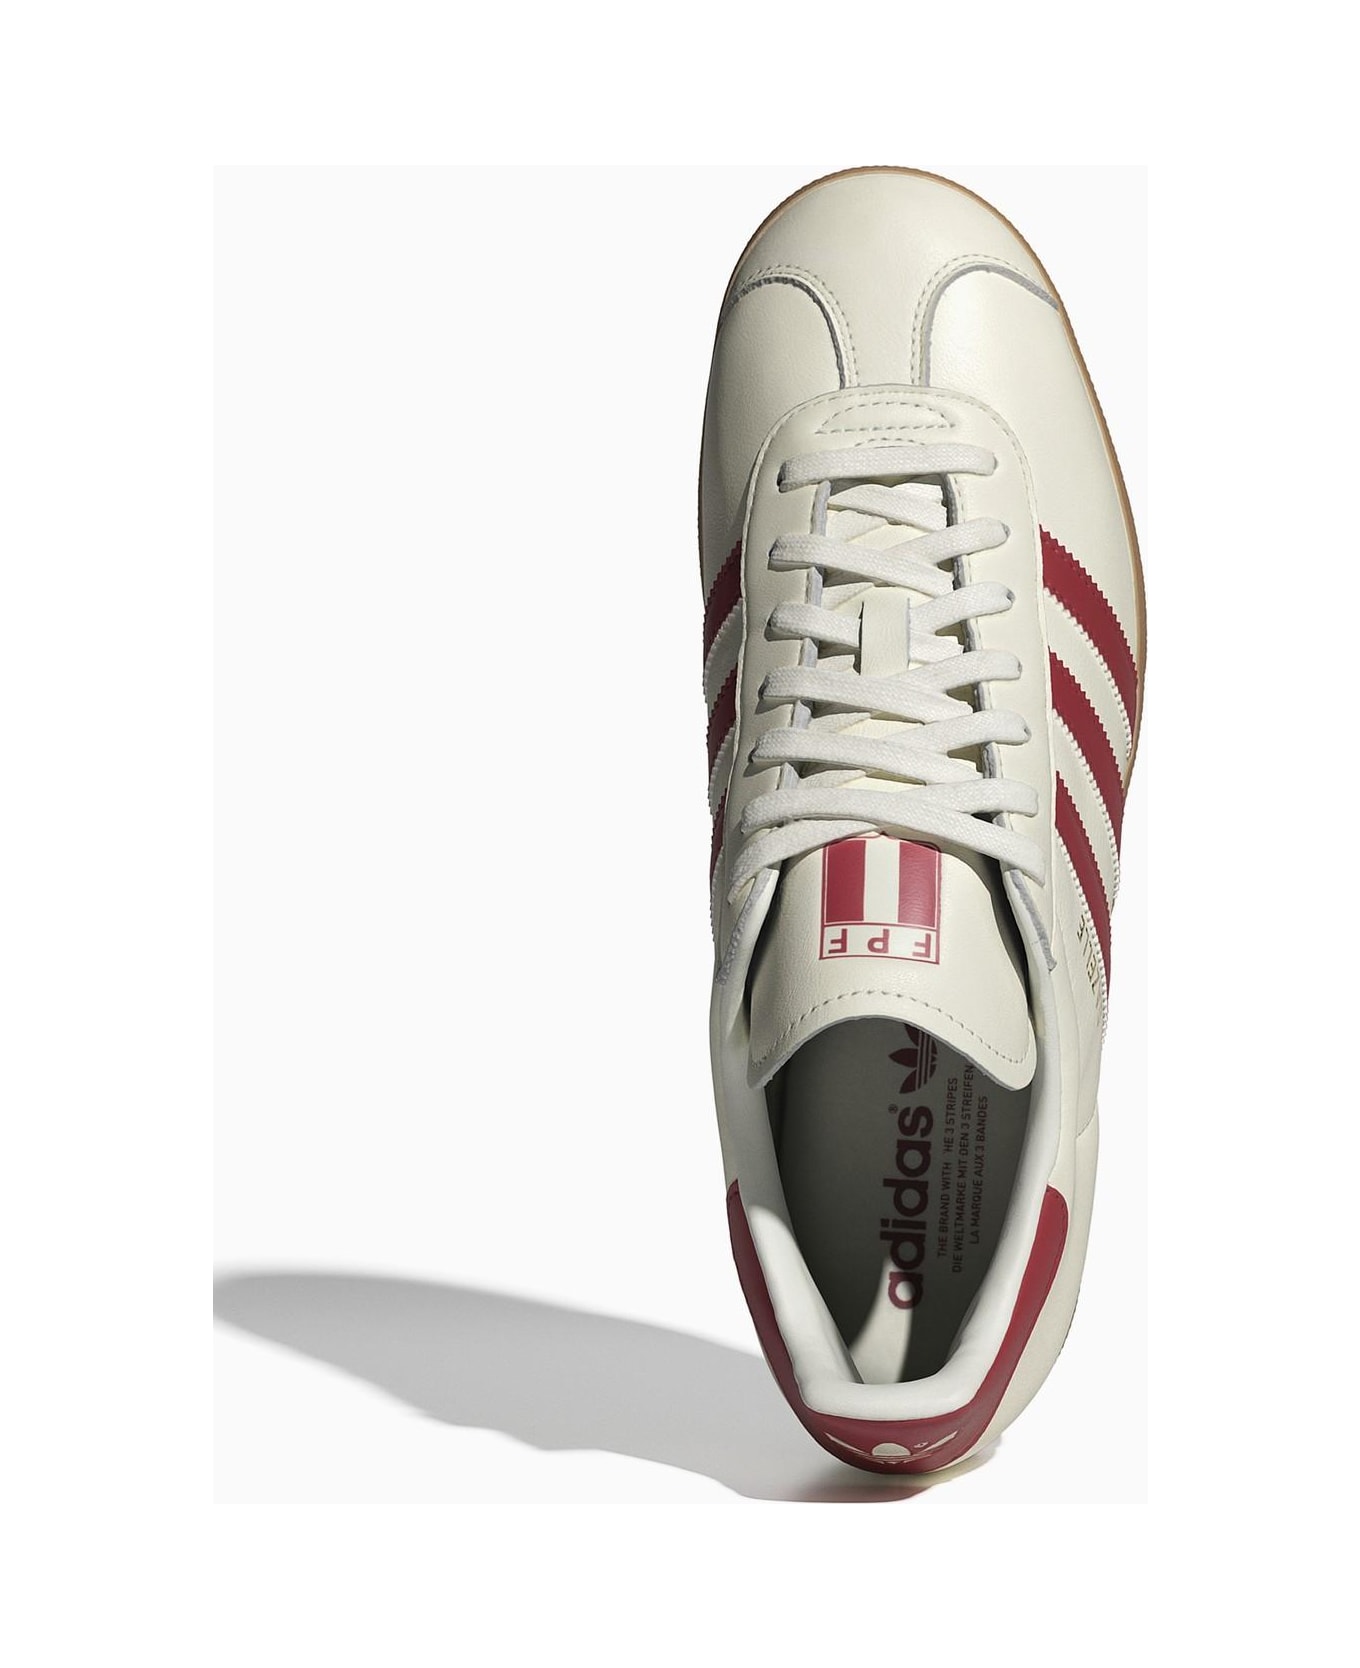 Adidas Originals Gazelle White\/red Sneakers - Ivory